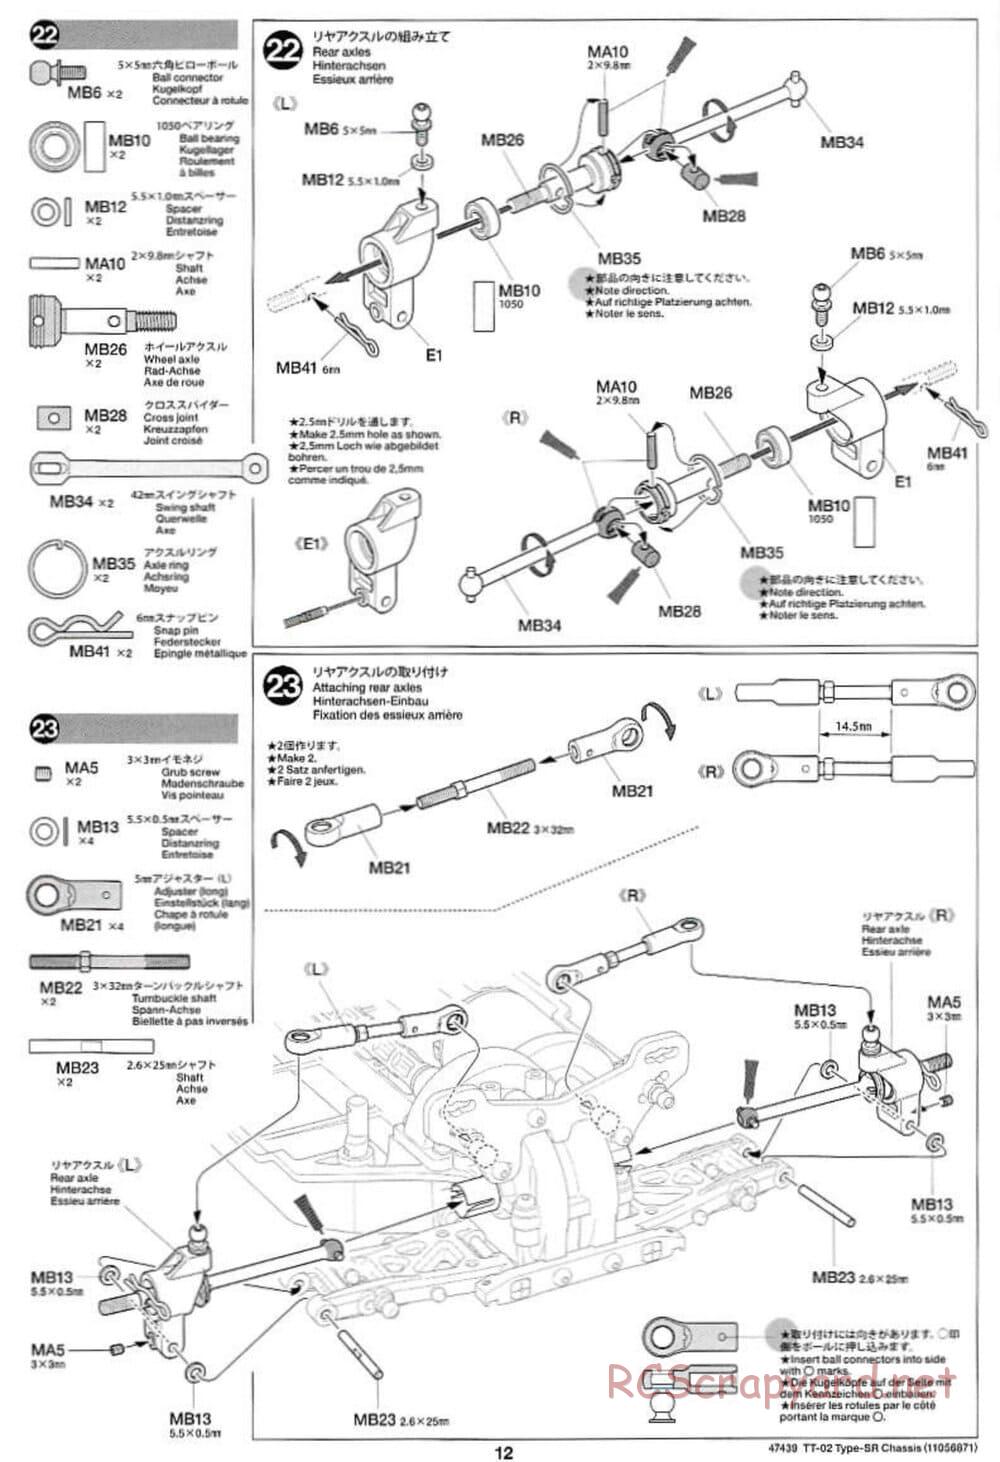 Tamiya - TT-02 Type-SR Chassis - Manual - Page 12